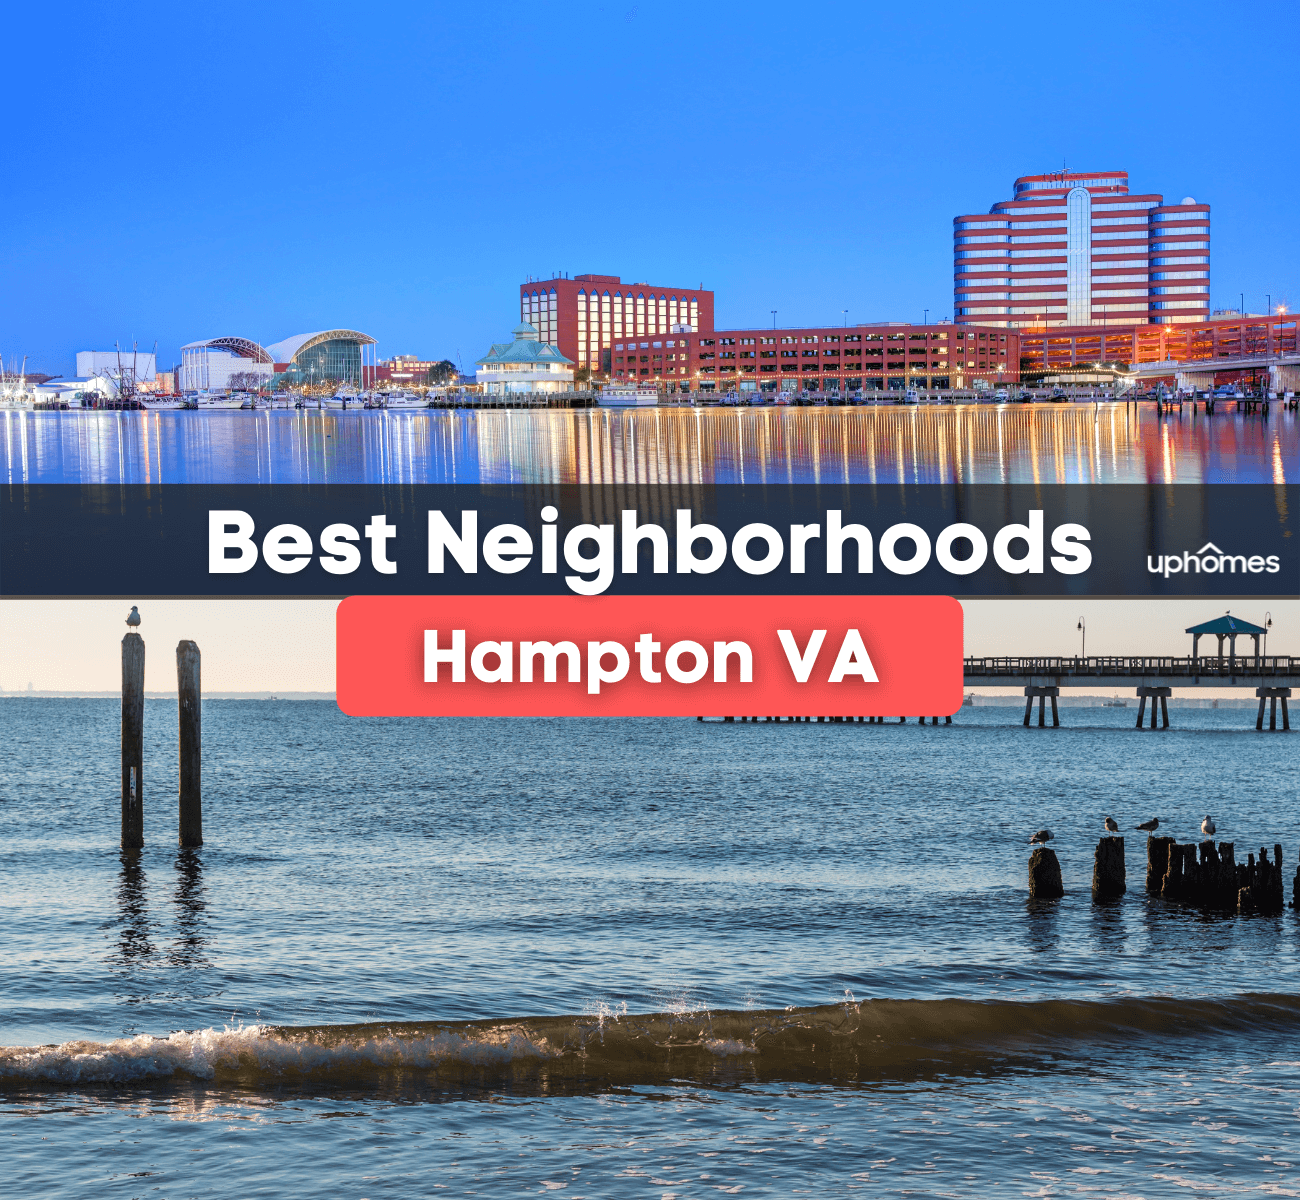 Best Neighborhoods in Hampton, VA - Where are the best places to live in Hampton, Virginia?